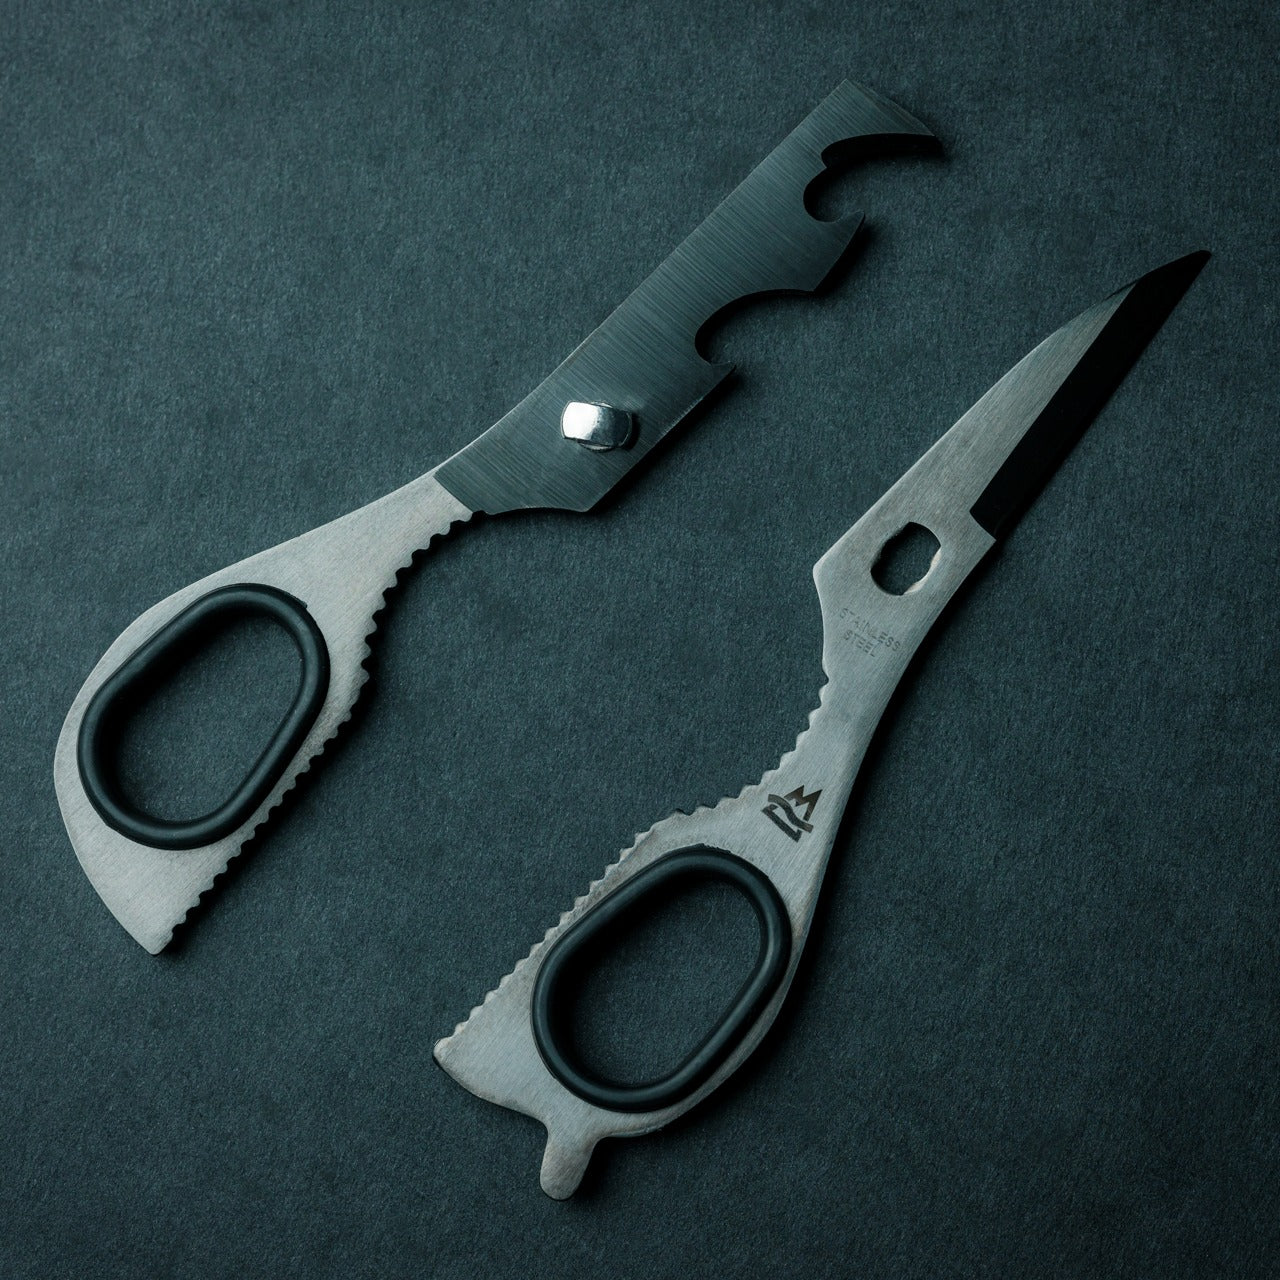 5 Best Scissors for Home, Workshop, EDC